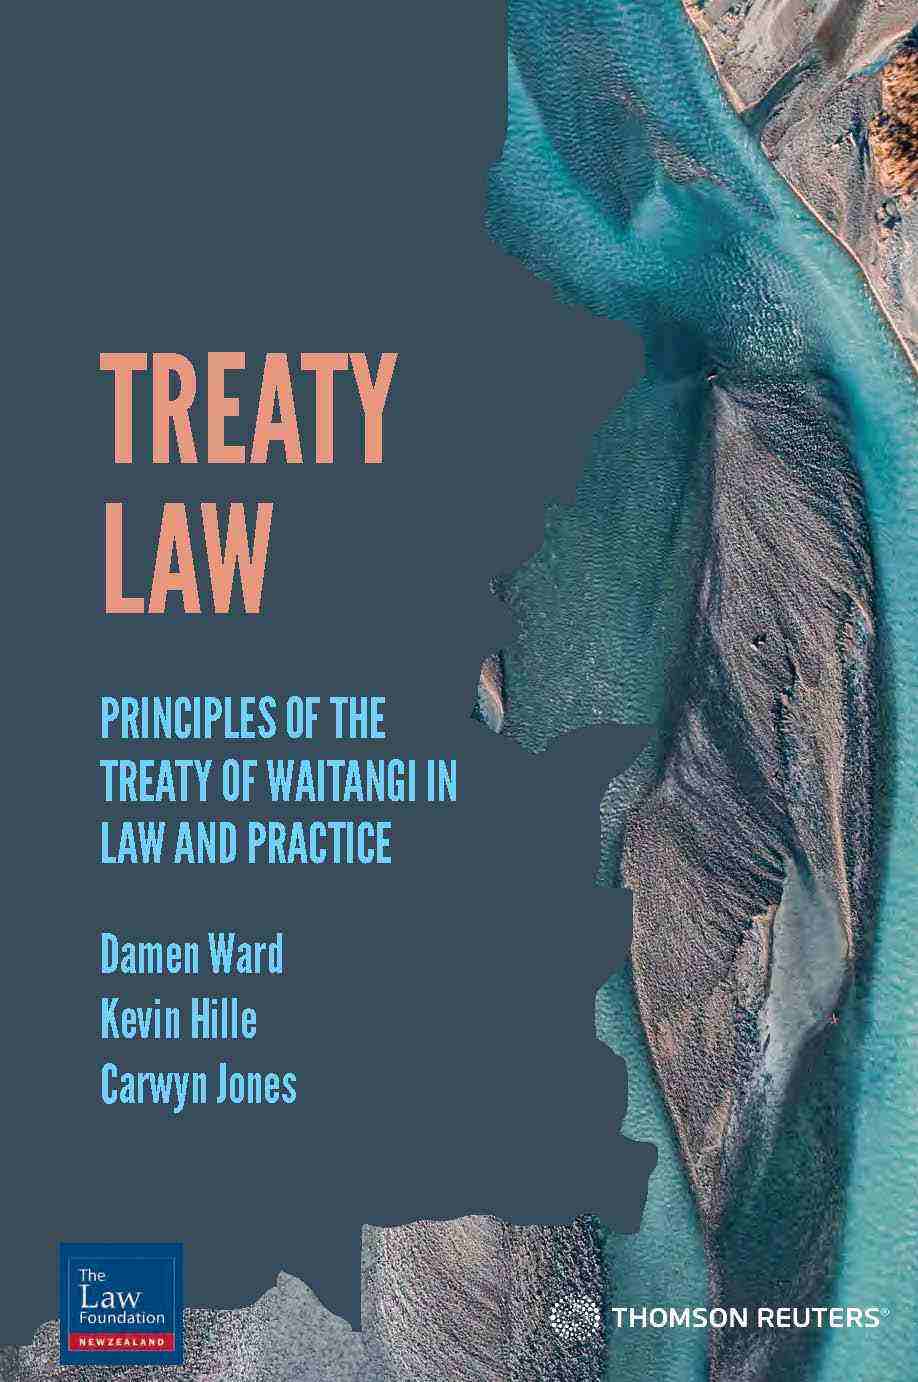 Treaty Law: Principles of the Treaty of Waitangi in Law and Practice